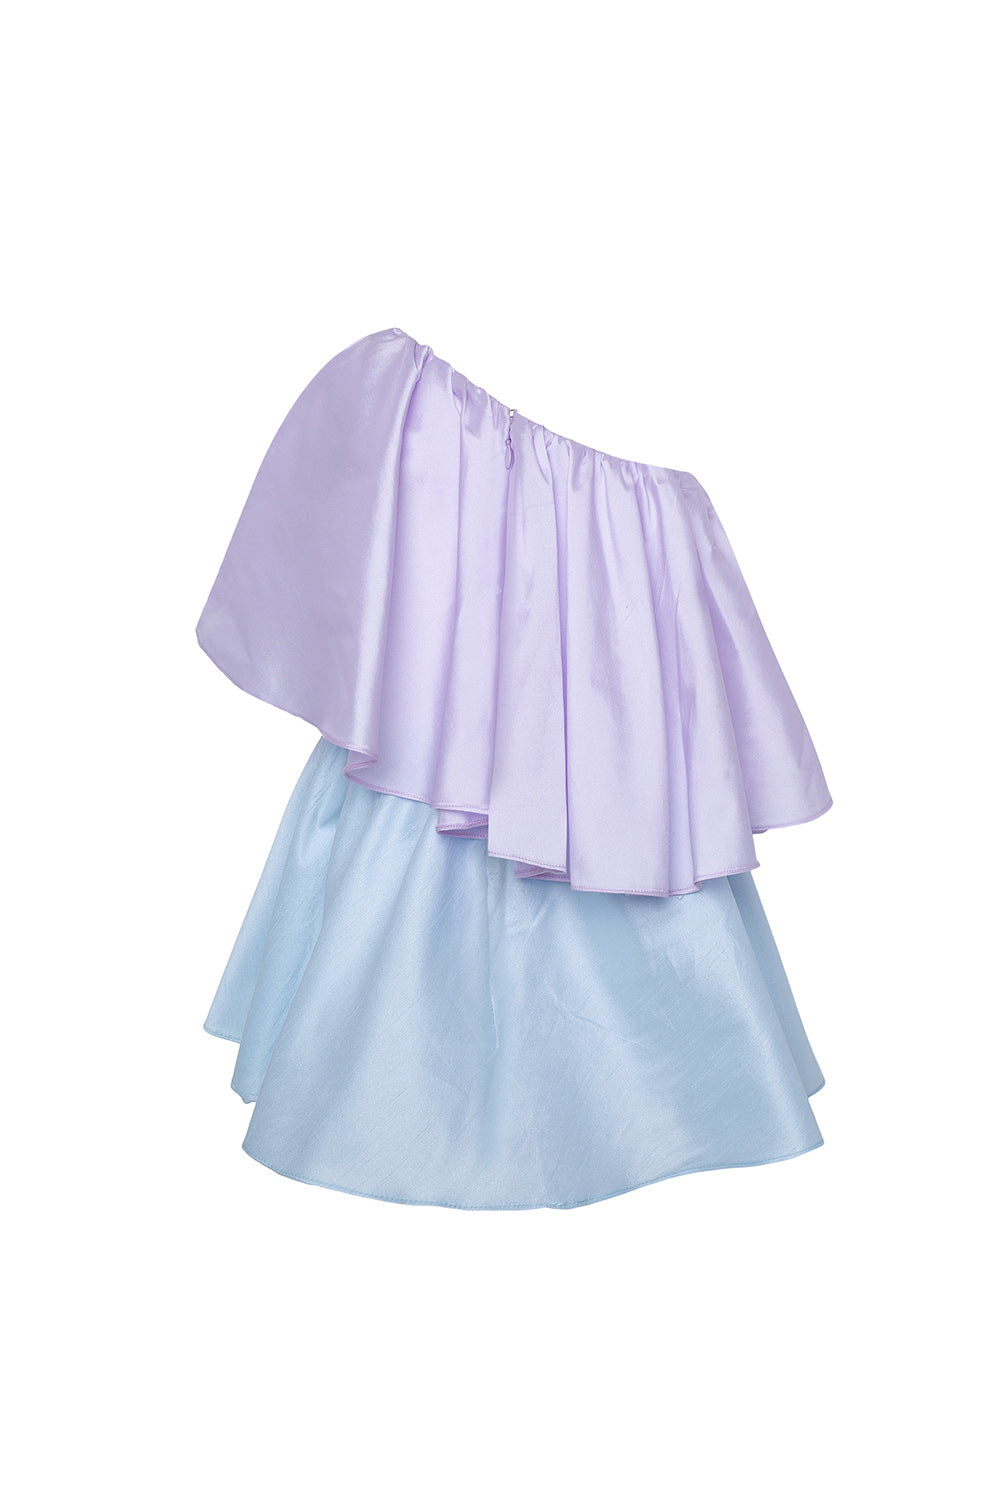 Candylicious Lilac- Blue Dress